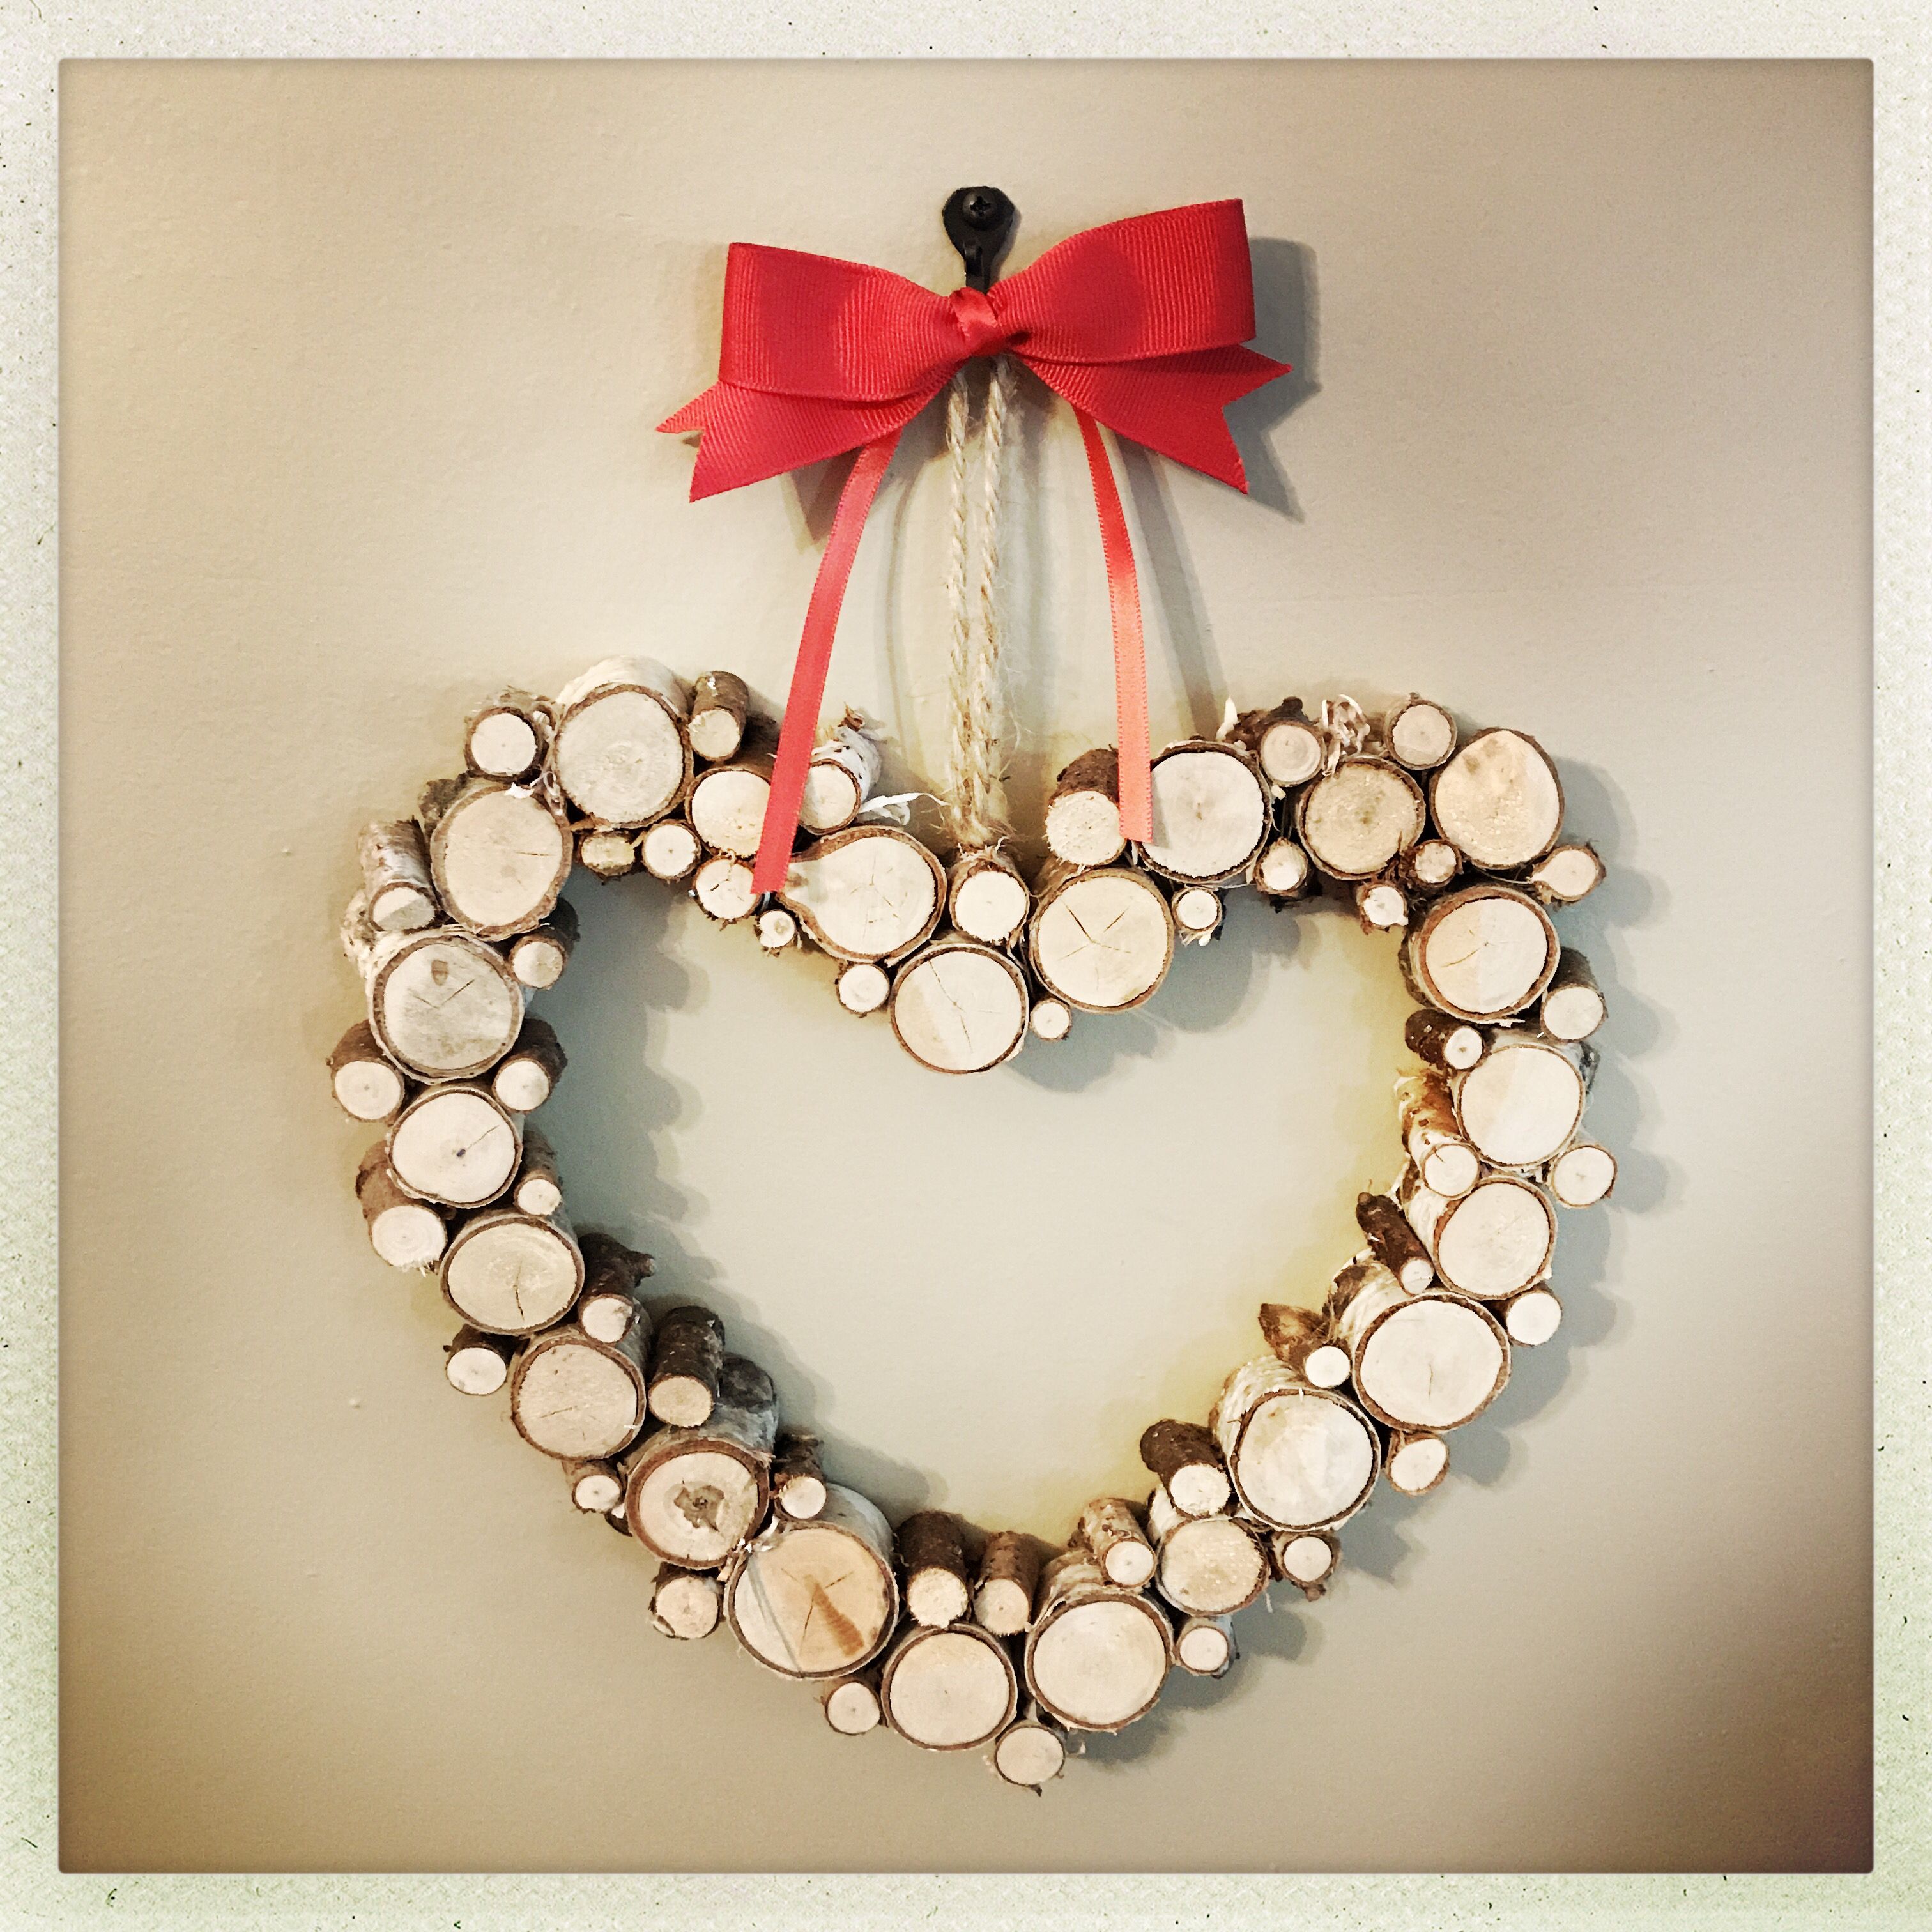 22 DIY Valentine's Wreaths - Heart Shaped Wreaths for Front Door